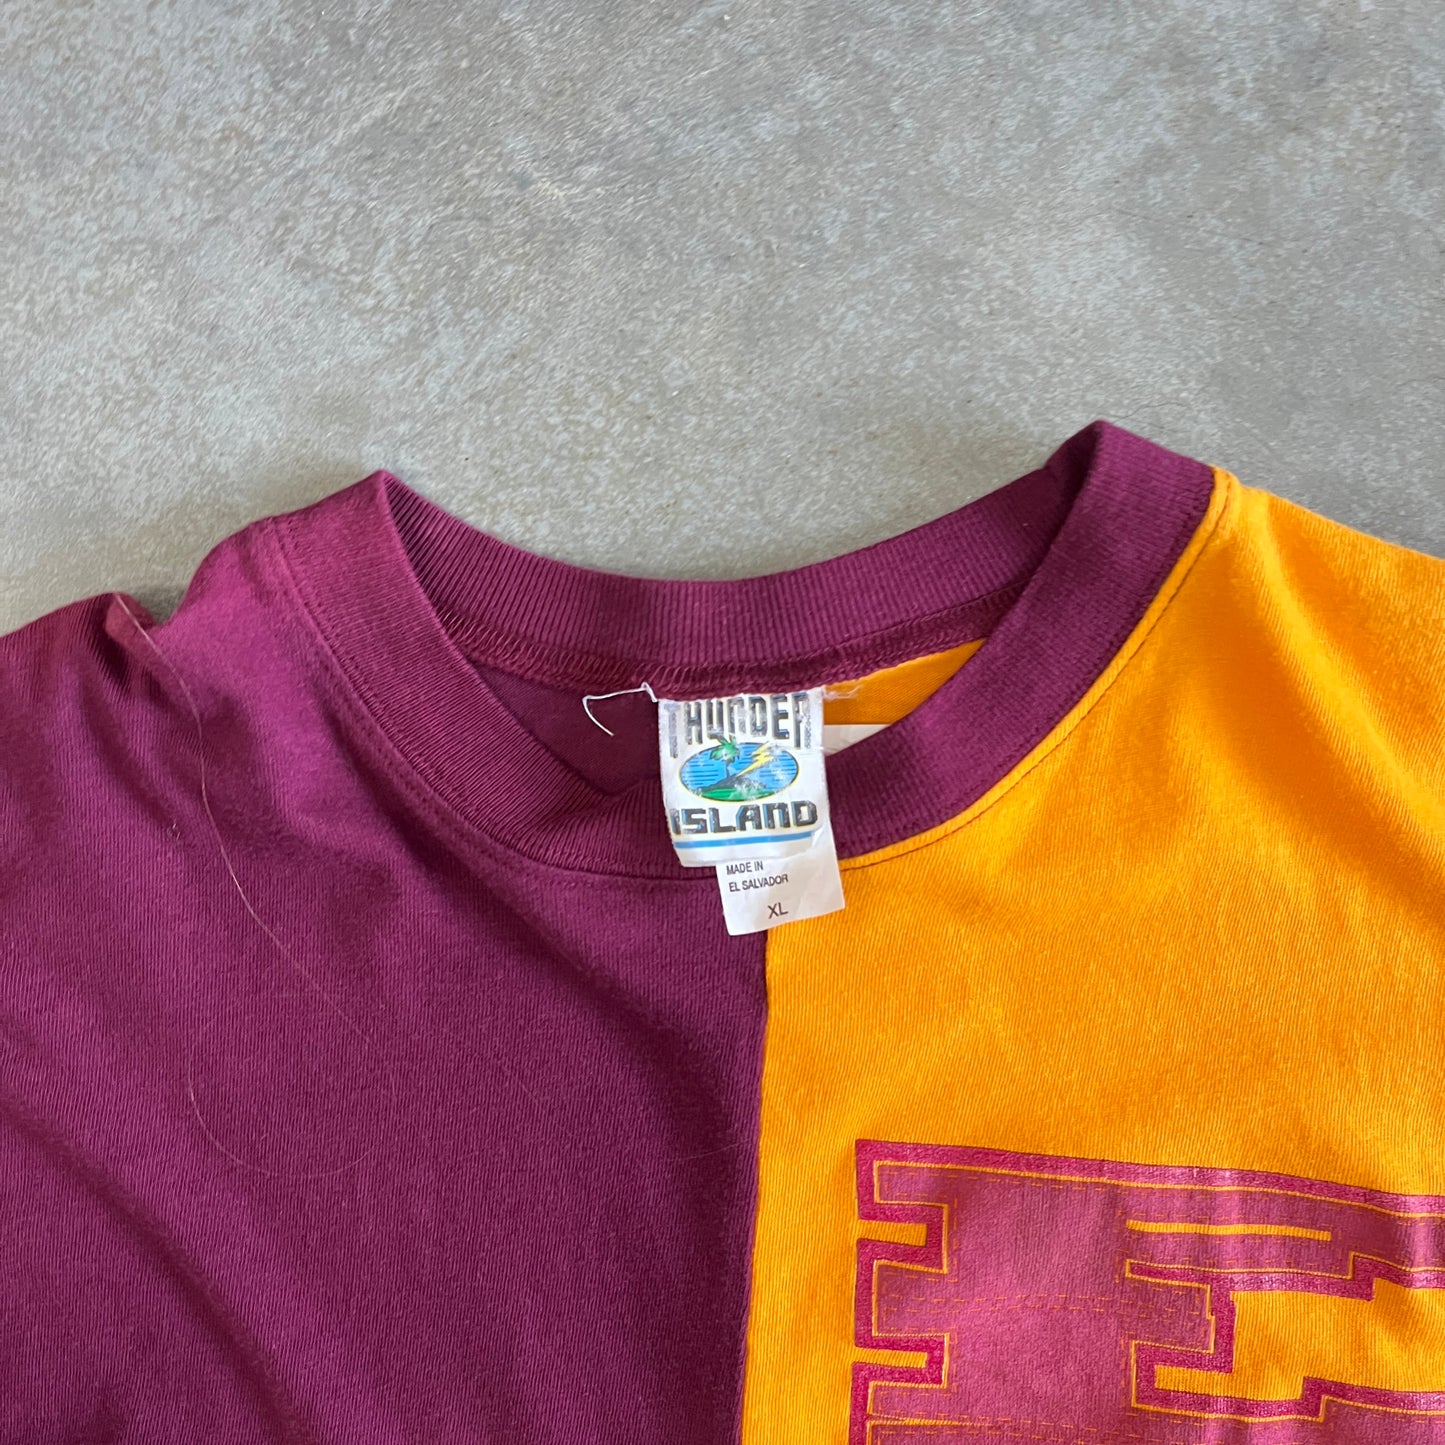 FSU Thunder Island Shirt - XL